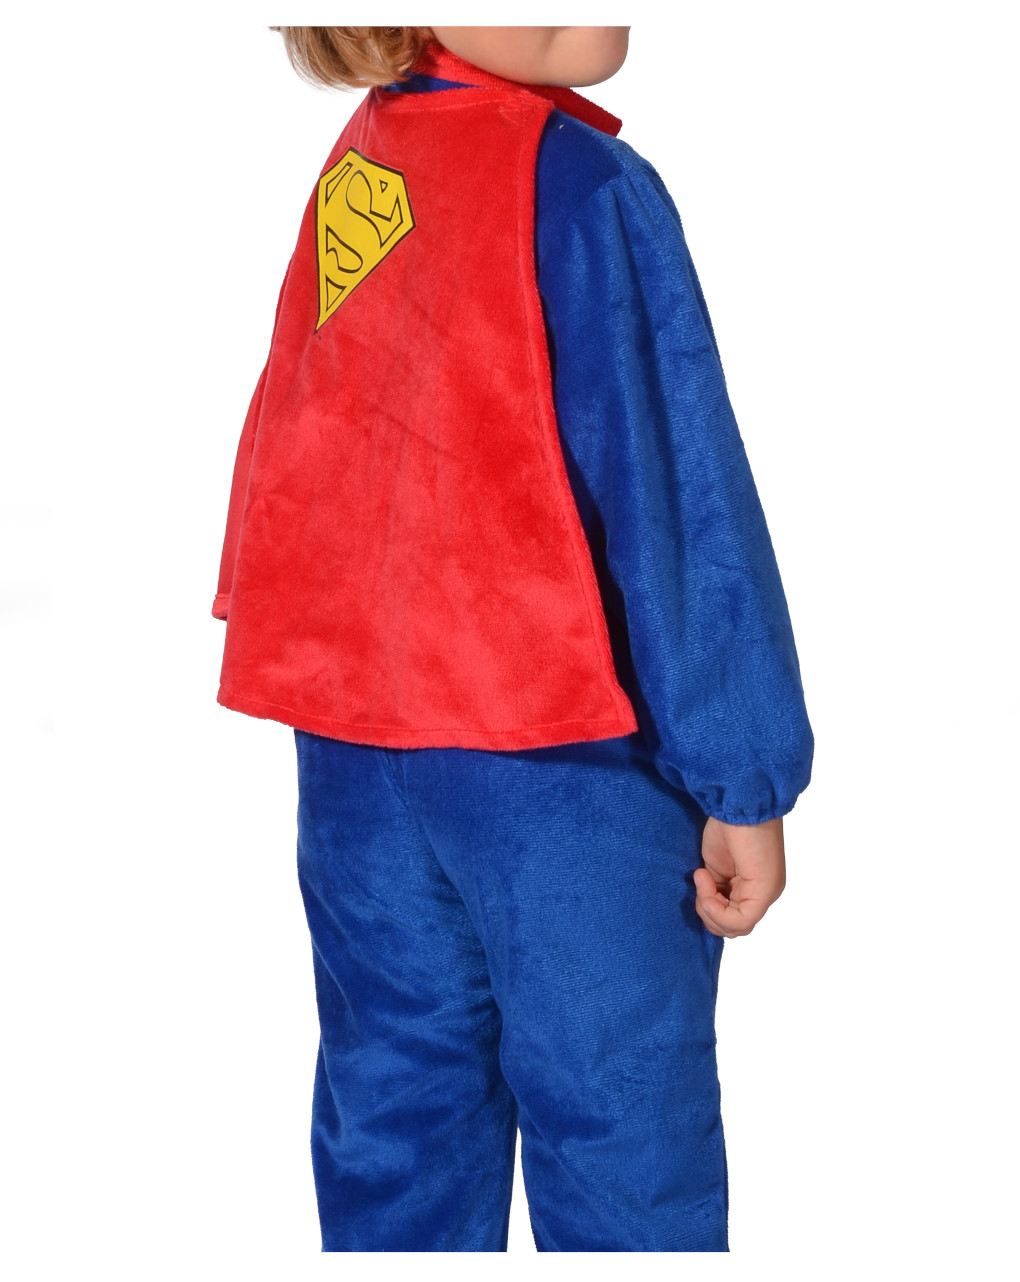 Superman costume baby - ciao - Ciao